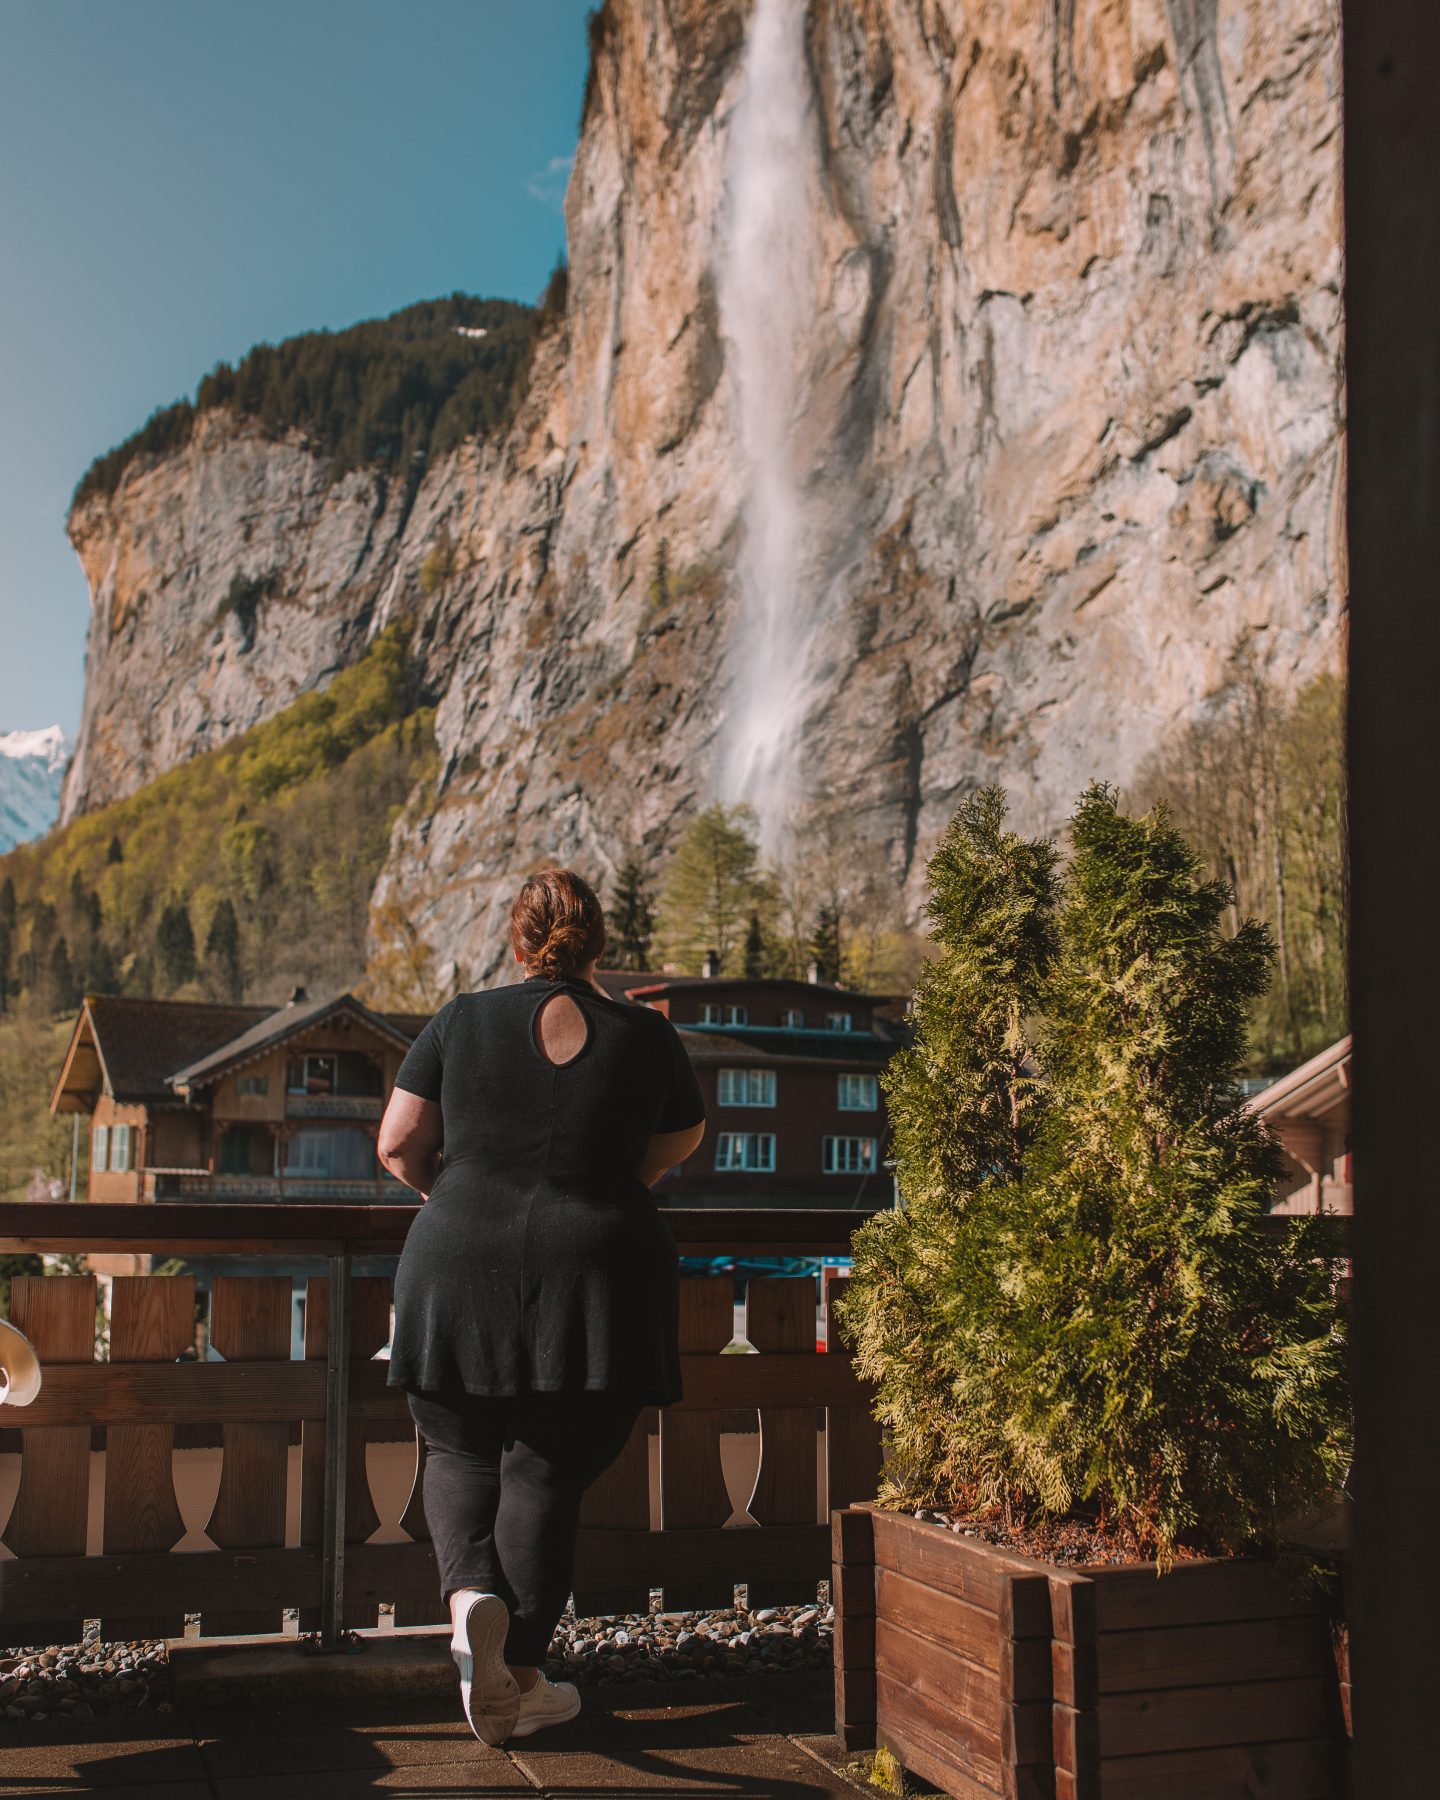 Standing on the balance of Hotel Staubbach admired the Staubbach Falls in Lauterbrunnen, Switzerland.